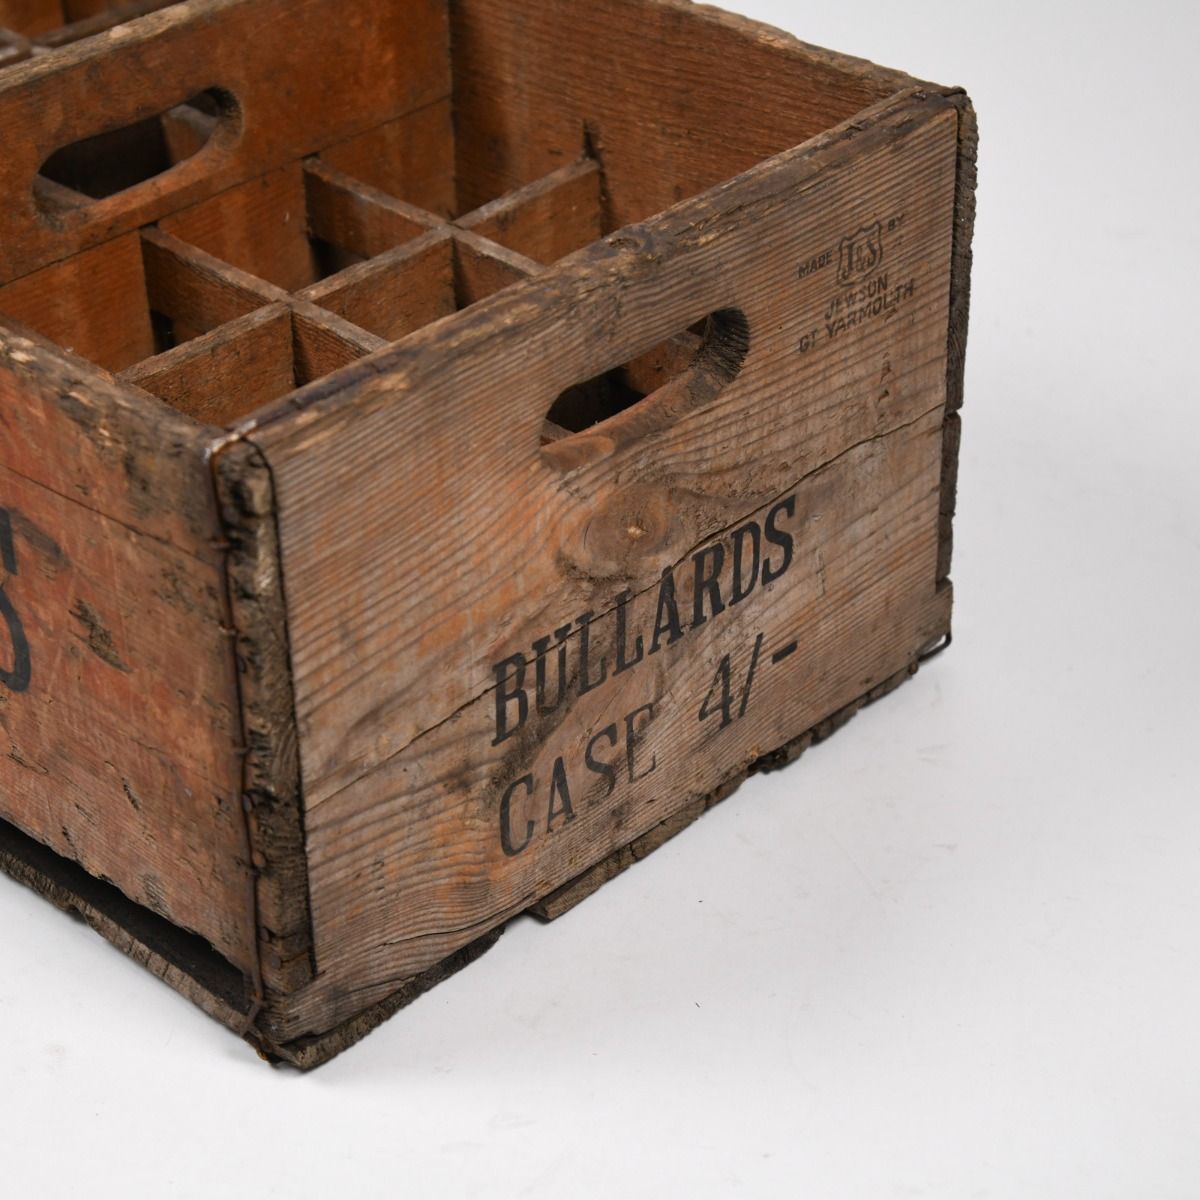 Vintage Bullards Wooden Beer Bottle Crate